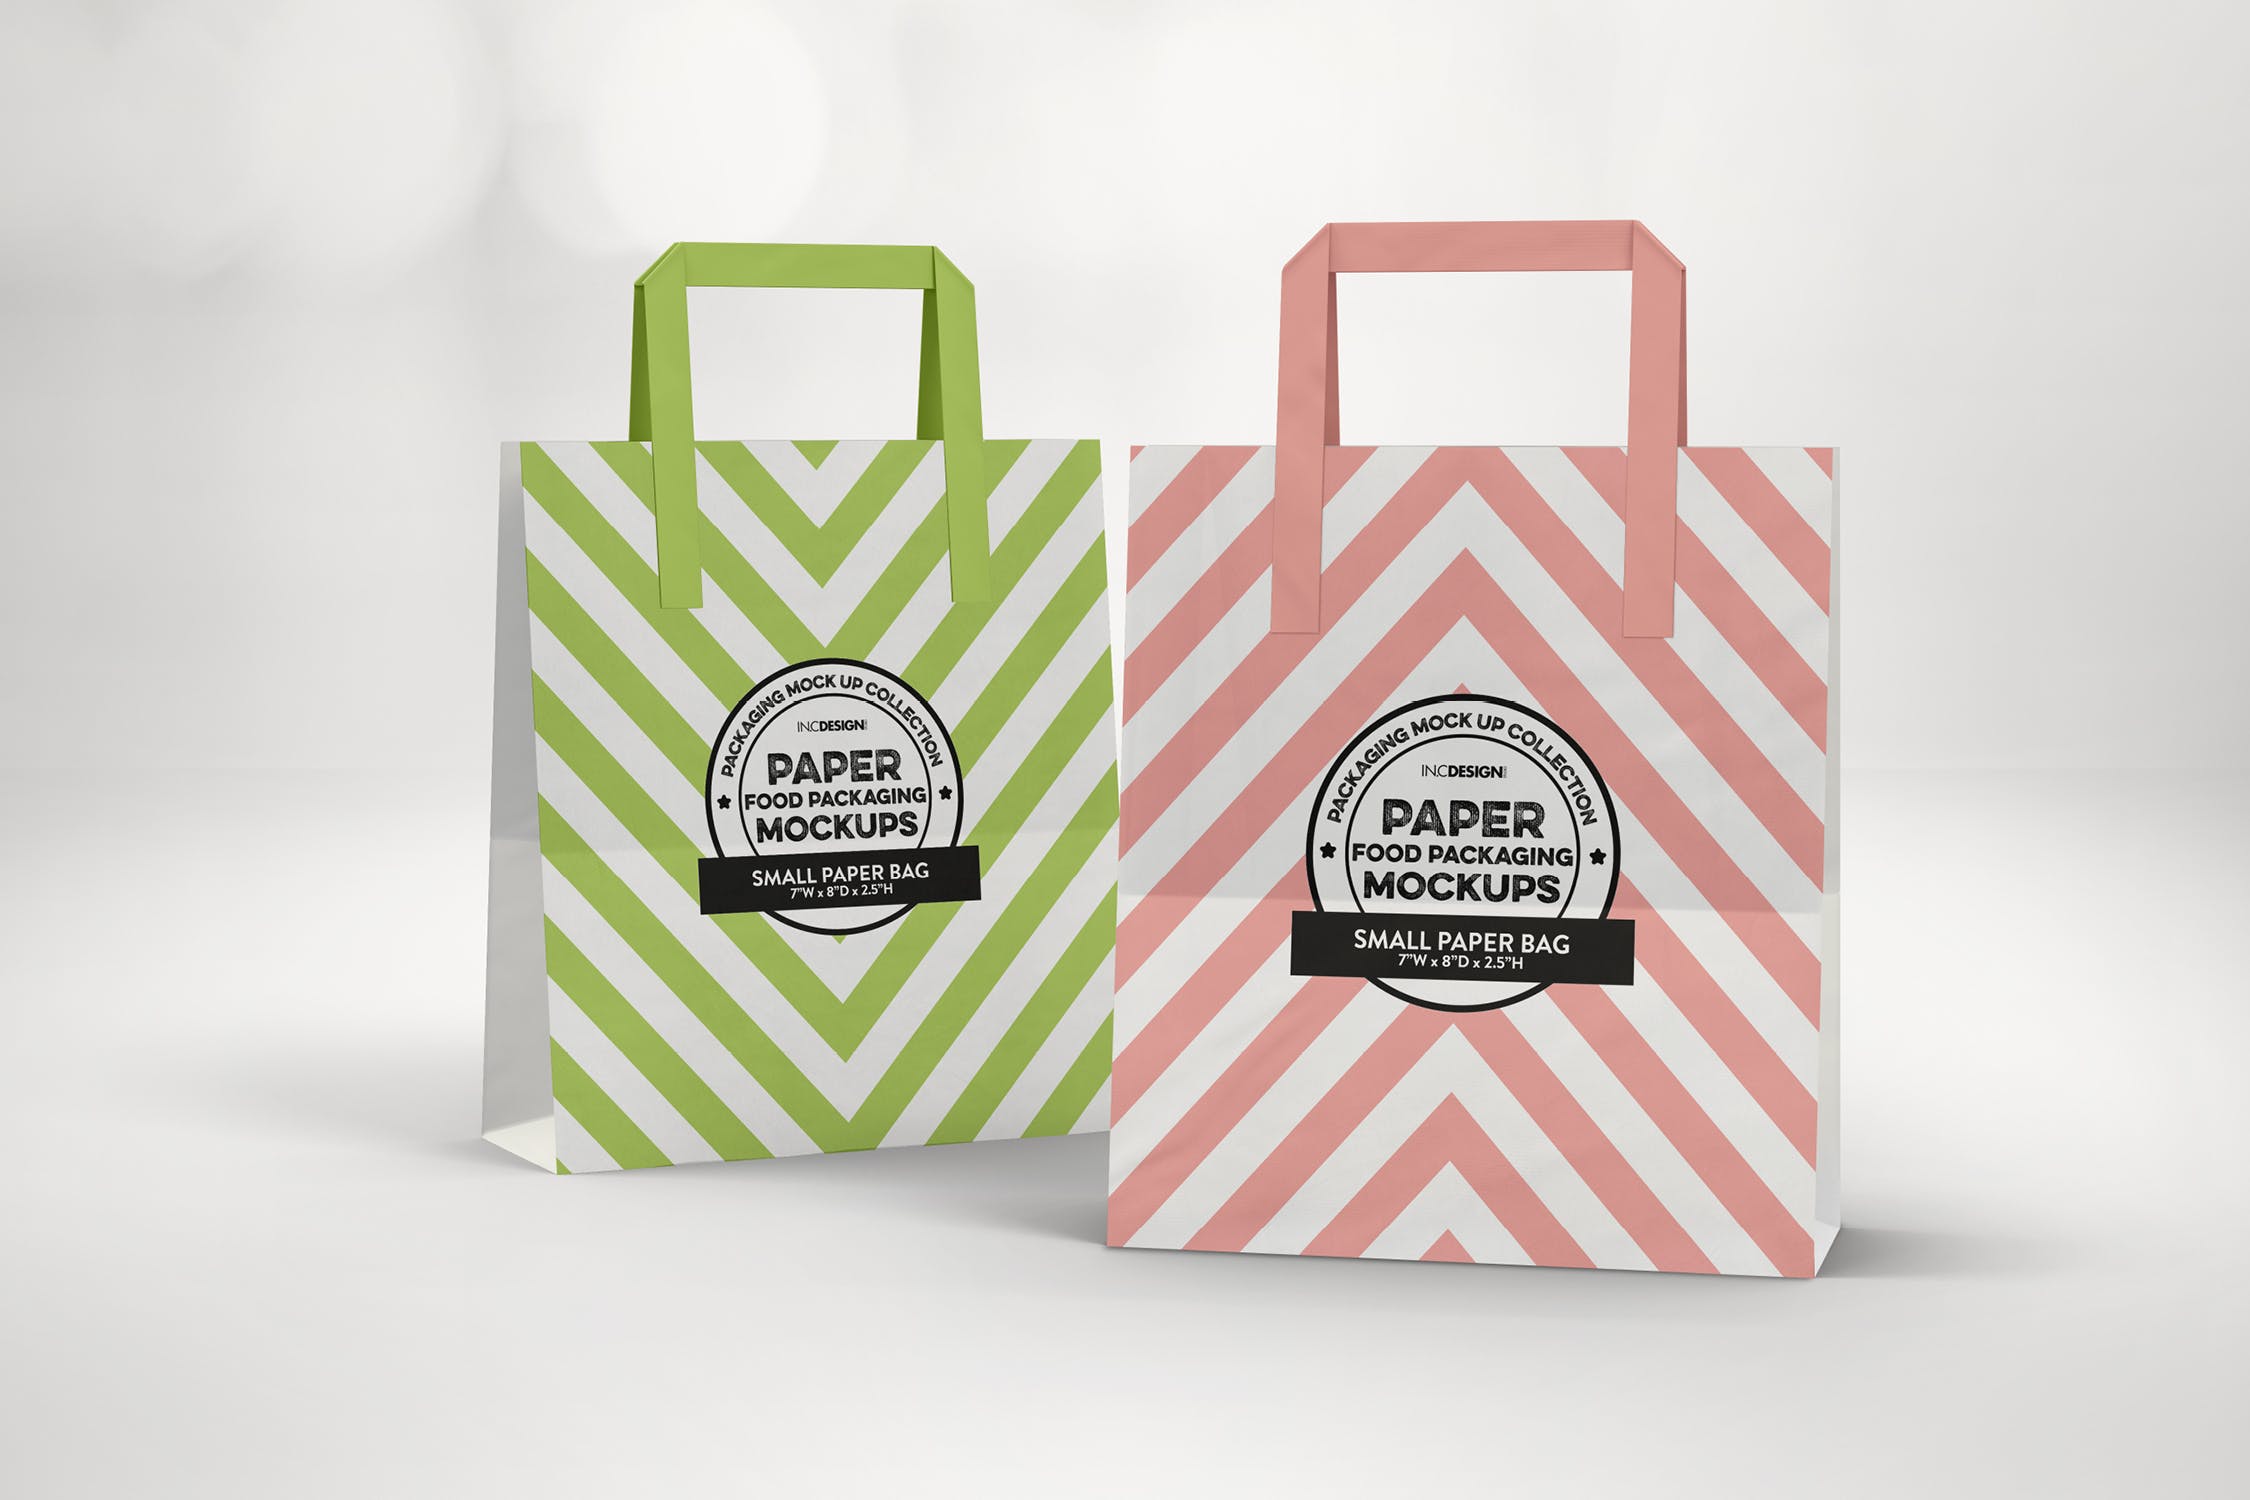 购物纸袋外观设计效果预览第一素材精选 Small Bags with Flat Handles Packaging Mockup插图(1)